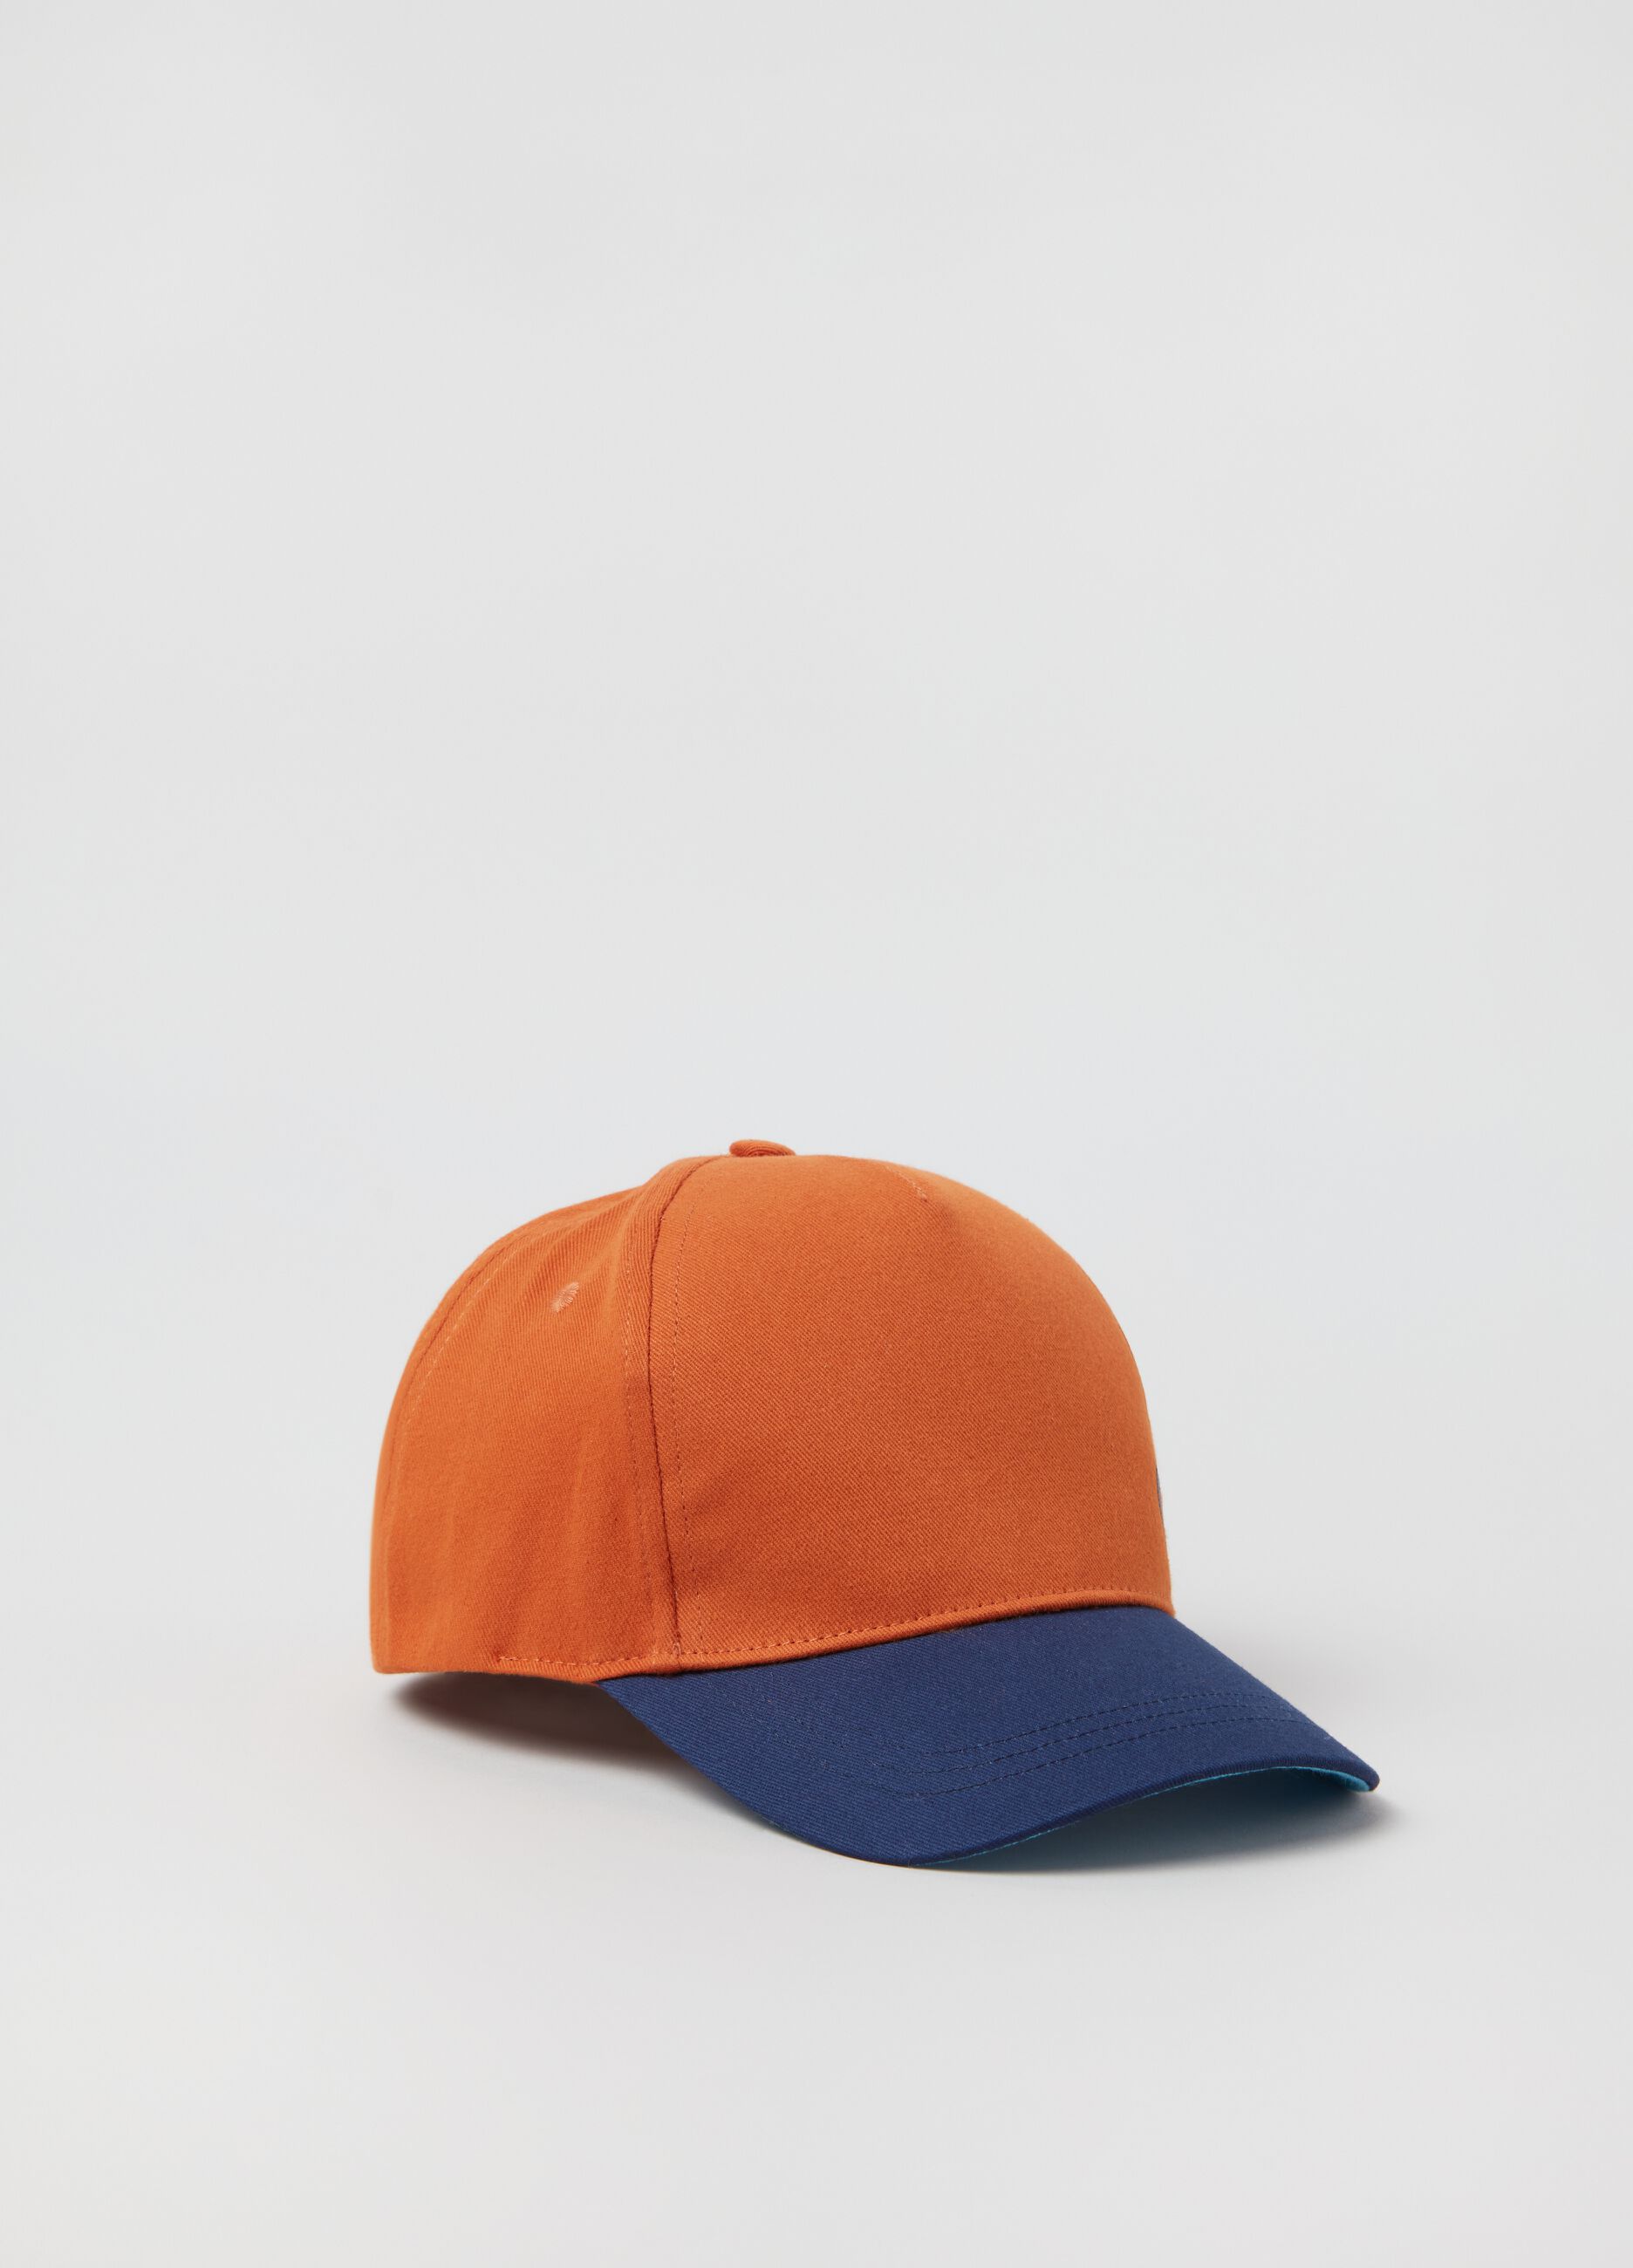 Baseball cap with contrasting visor